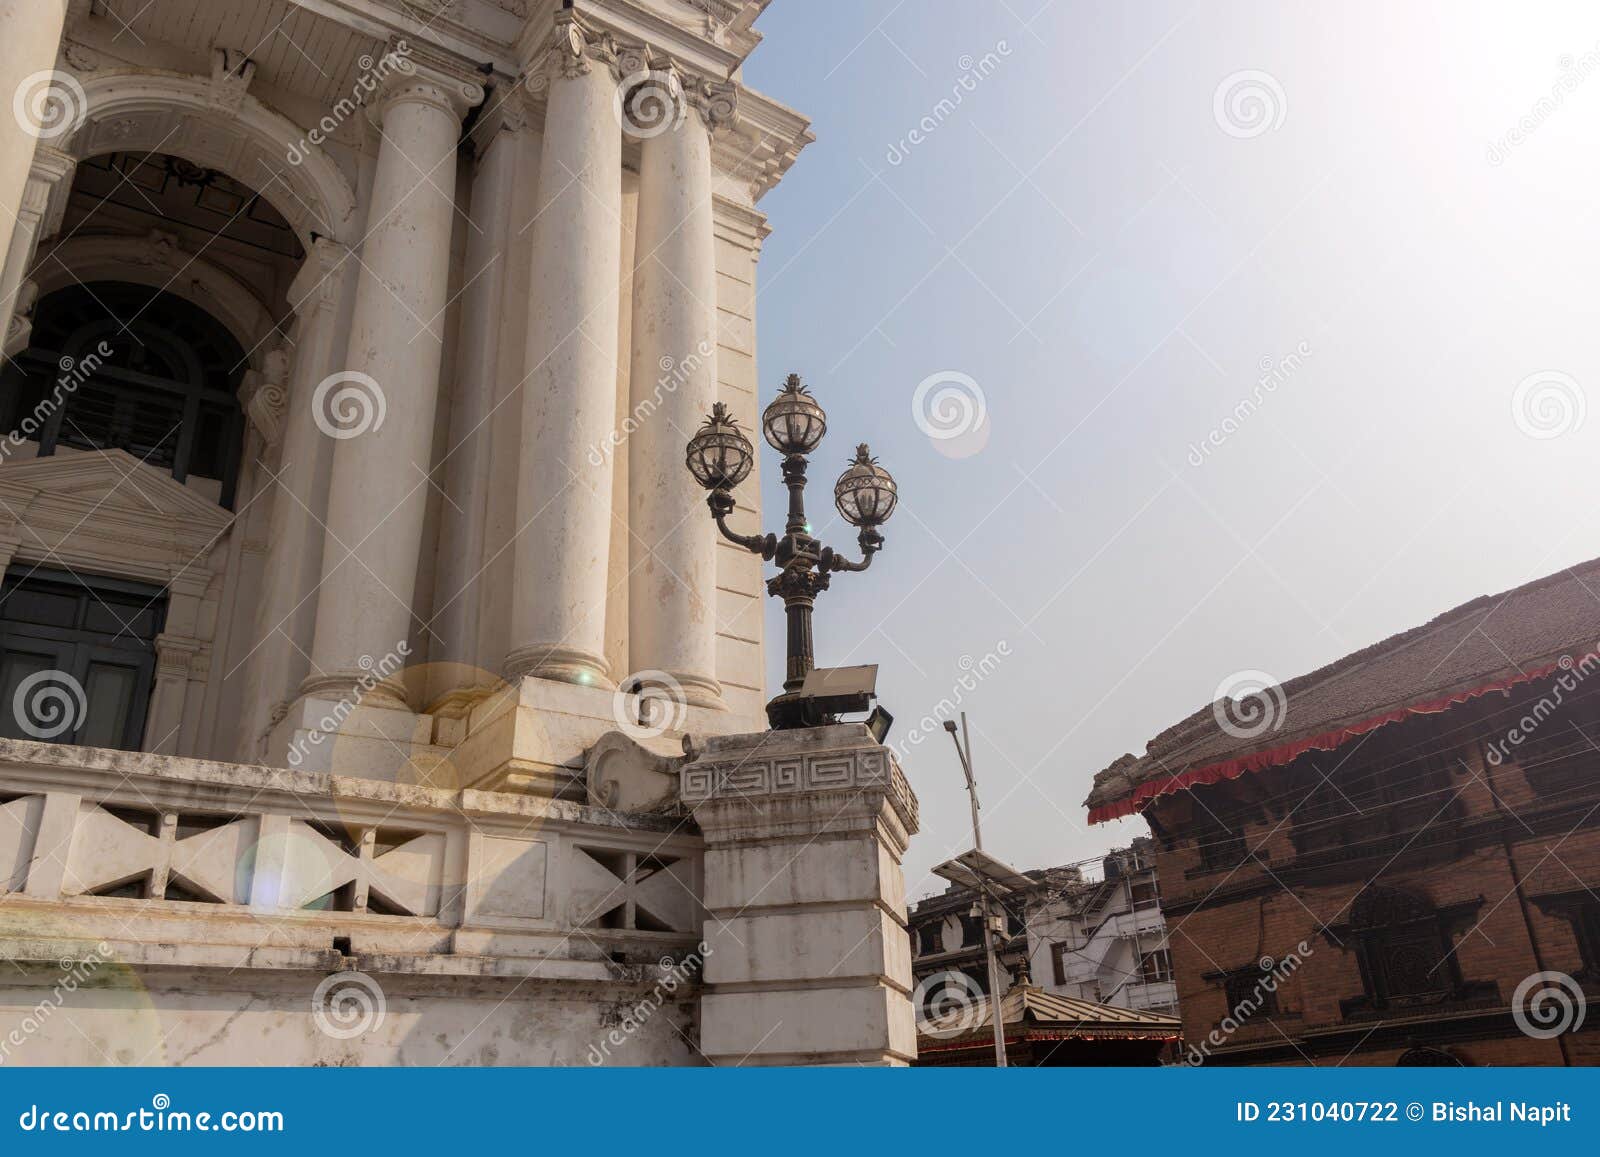 hanuman dhoka, also known as kathmandu`s royal palace is located in basantapur, kathmandu